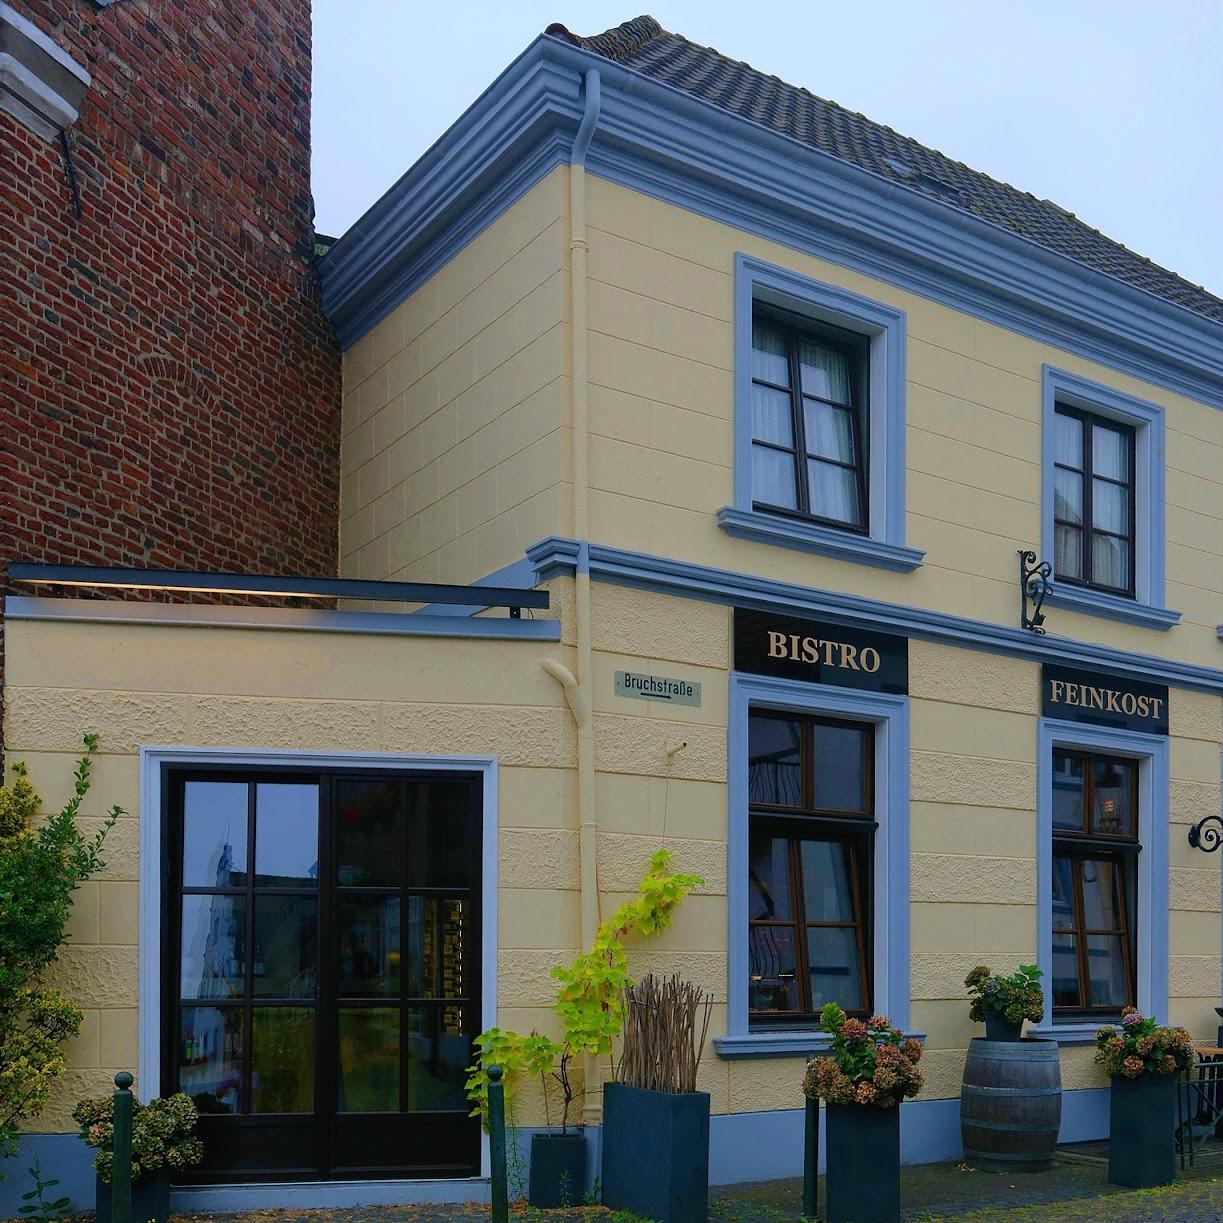 Restaurant "Bistro" in Wachtendonk